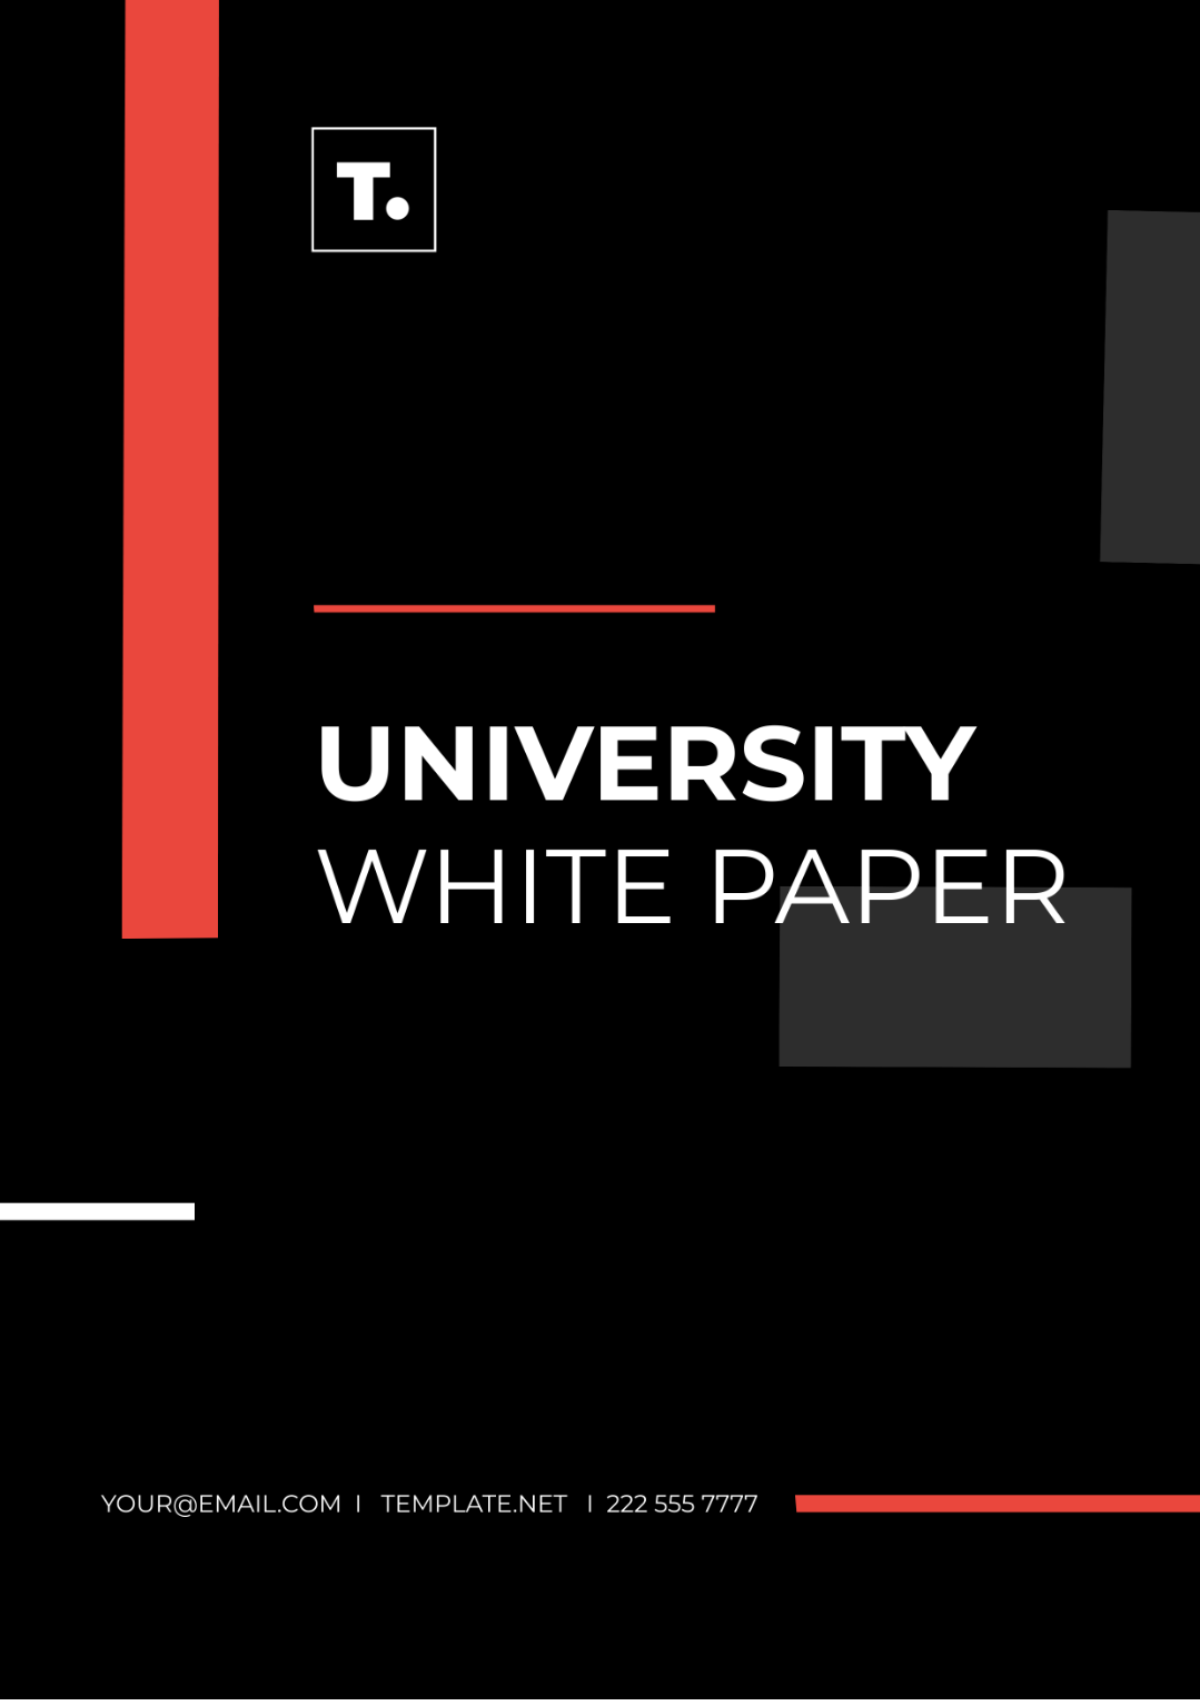 University White Paper Template